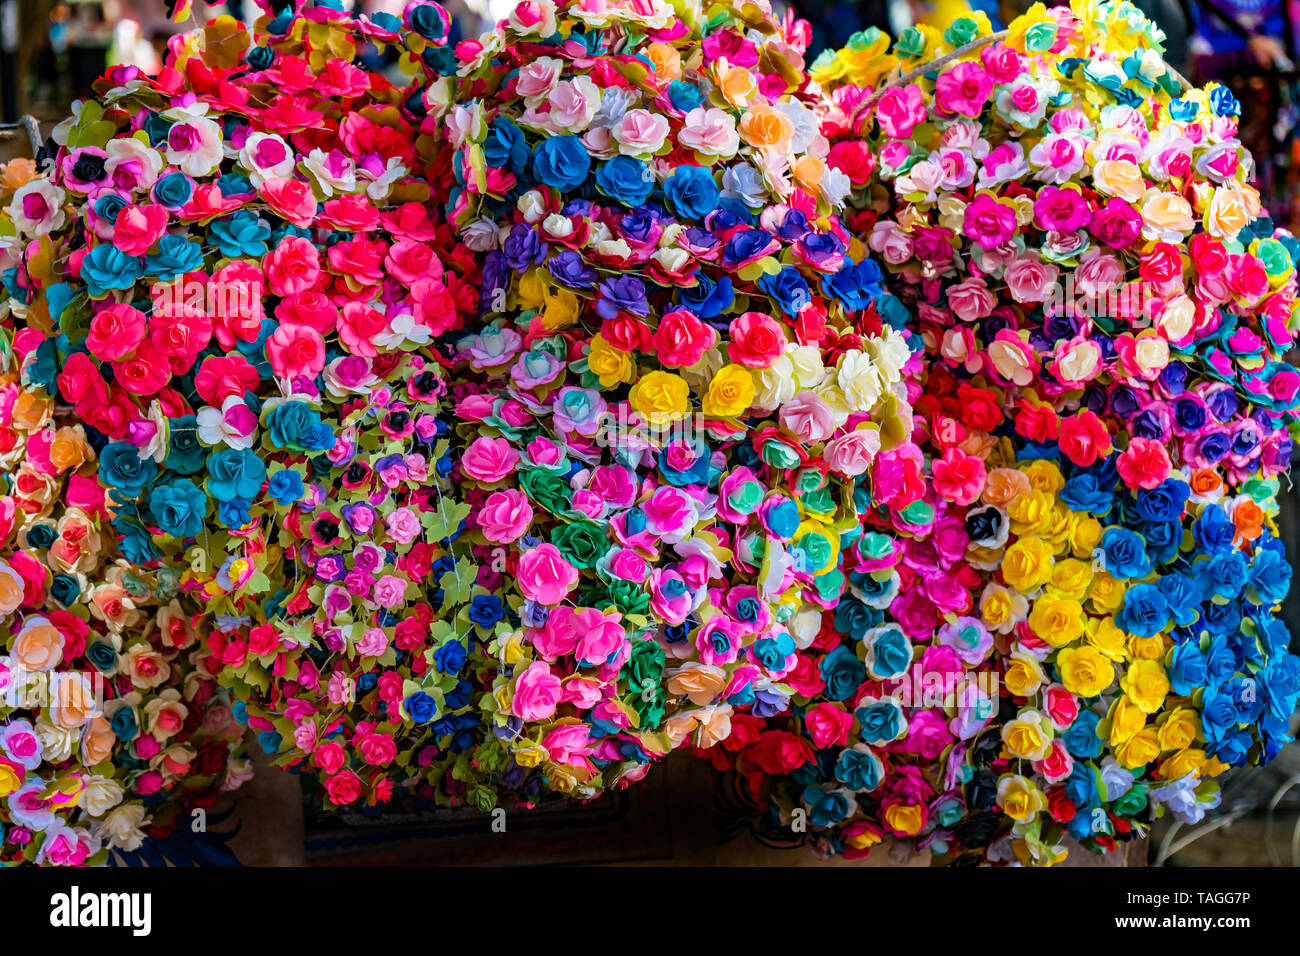 Flores mexicanas de papel fotografías e imágenes de alta resolución - Alamy